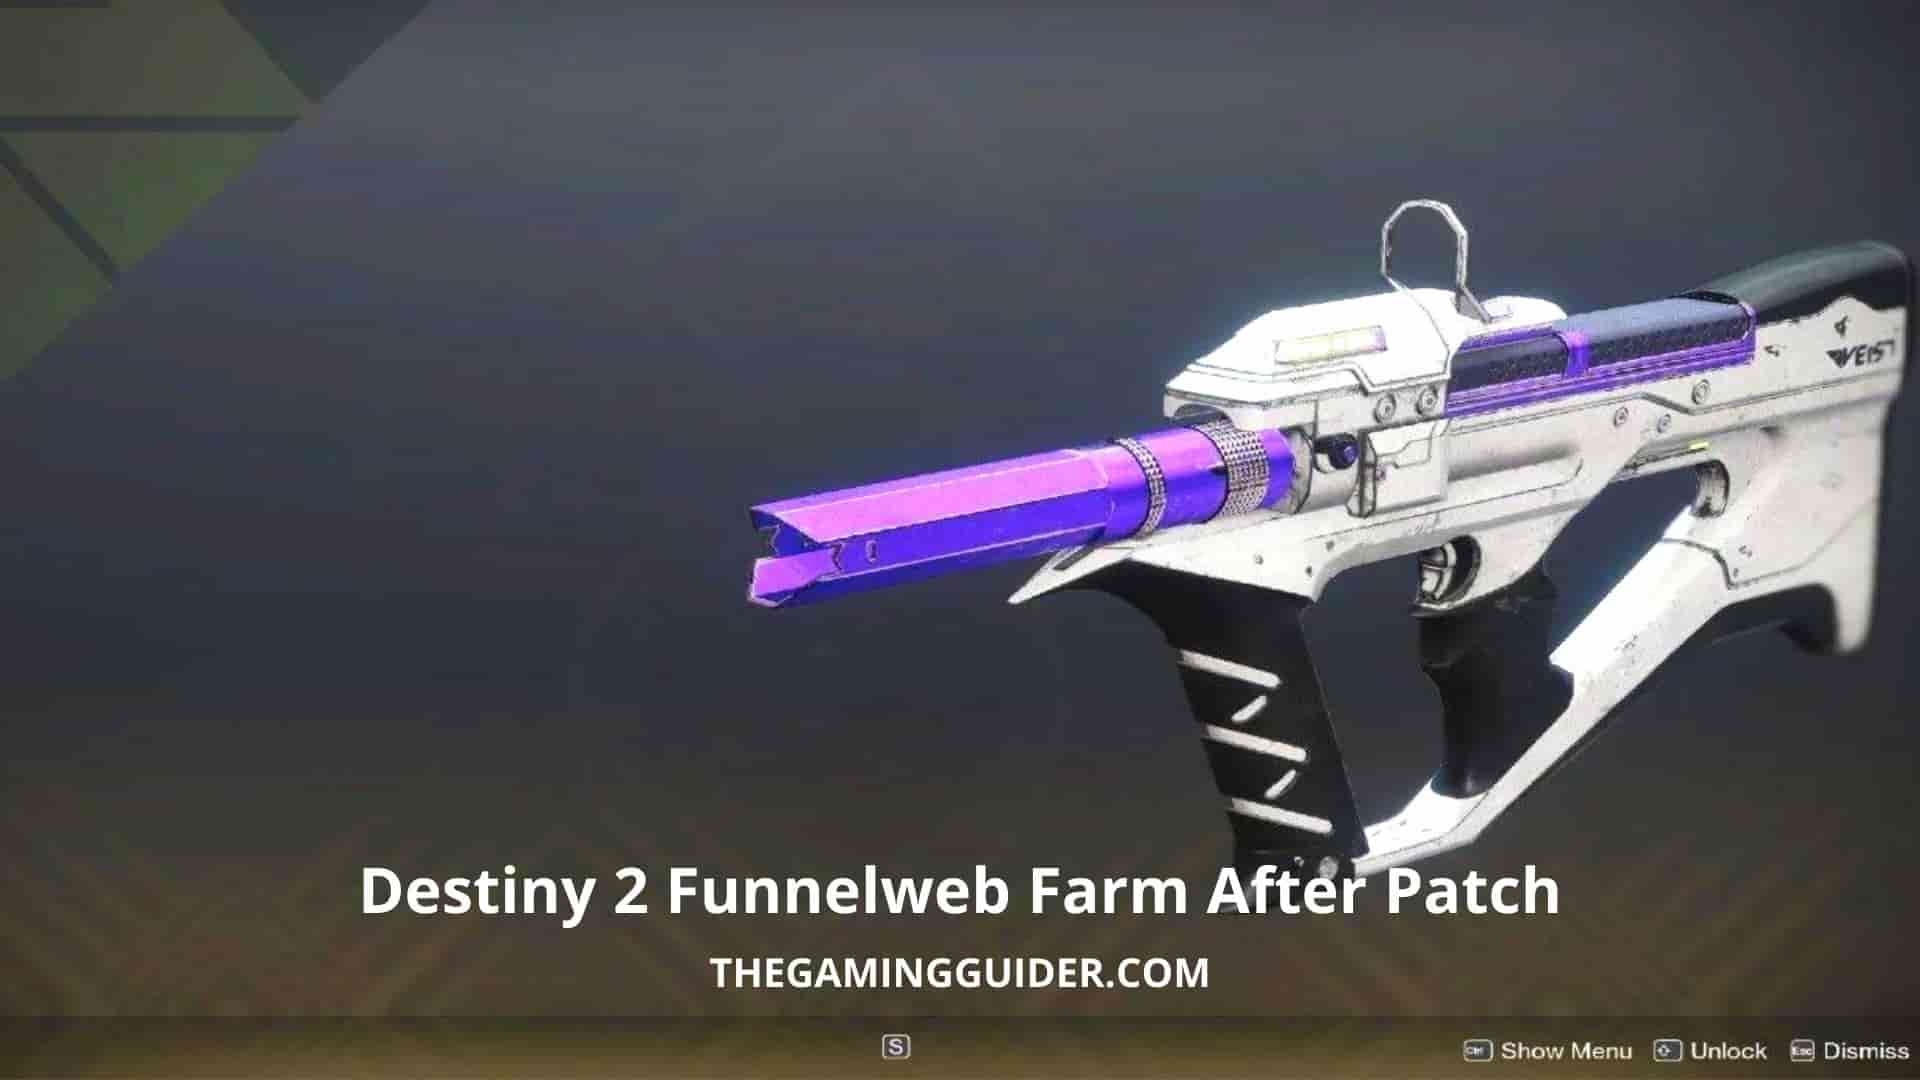 Destiny 2 Funnelweb Farm After Patch